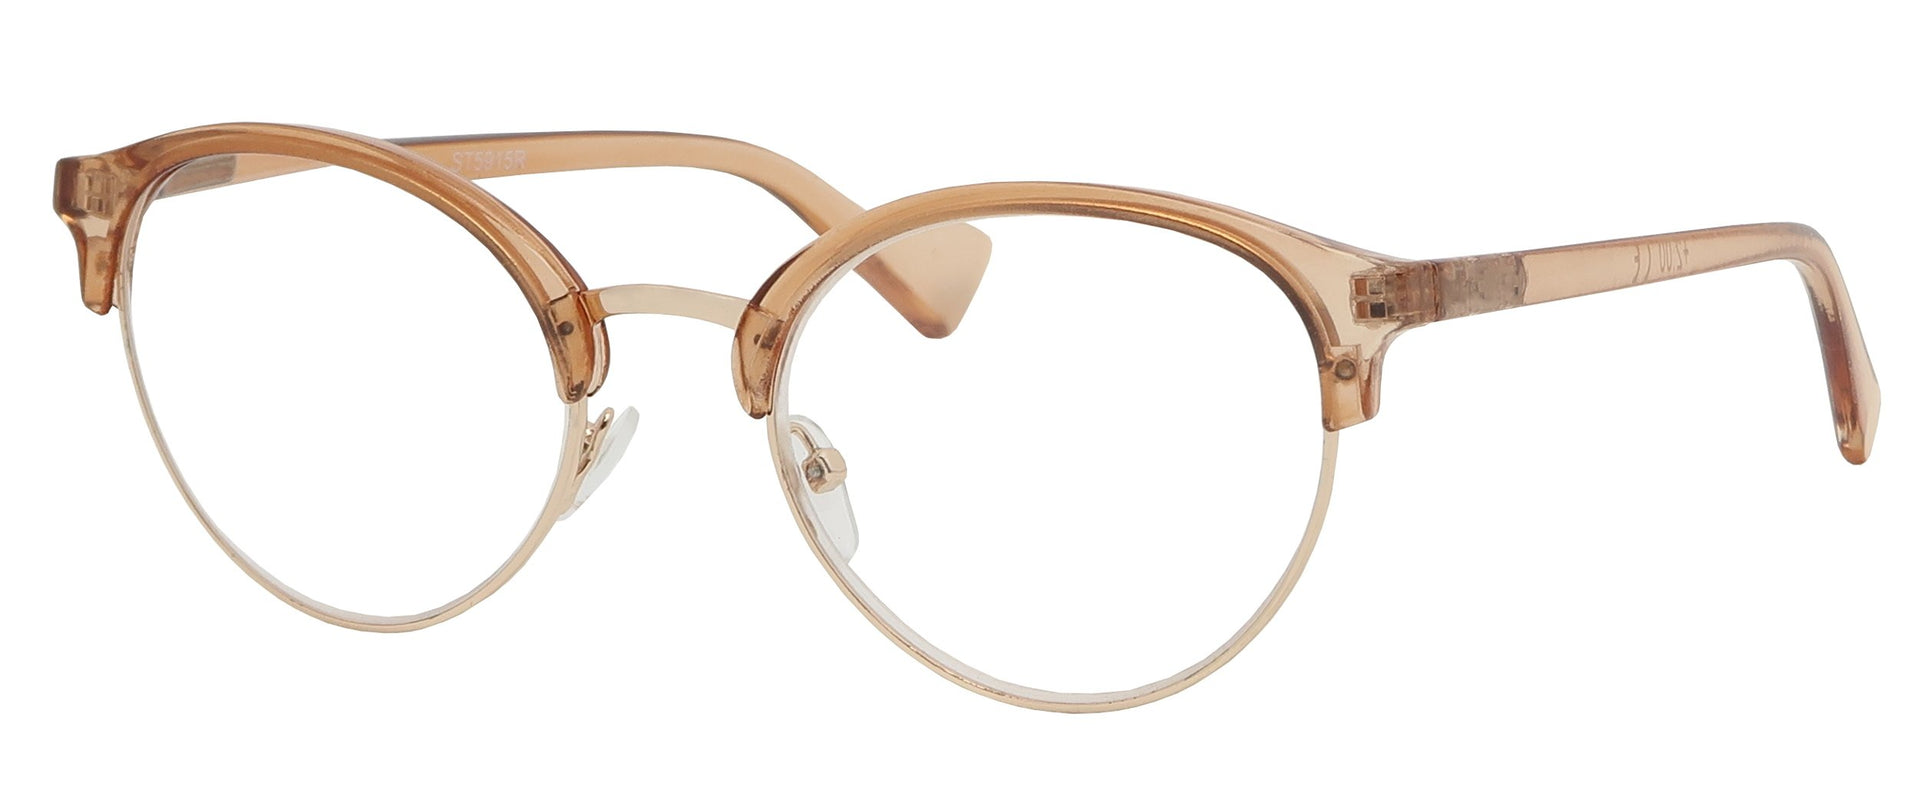 ST5915R - Wholesale Women's Translucent Browline Metal Reading Glasses in Orange